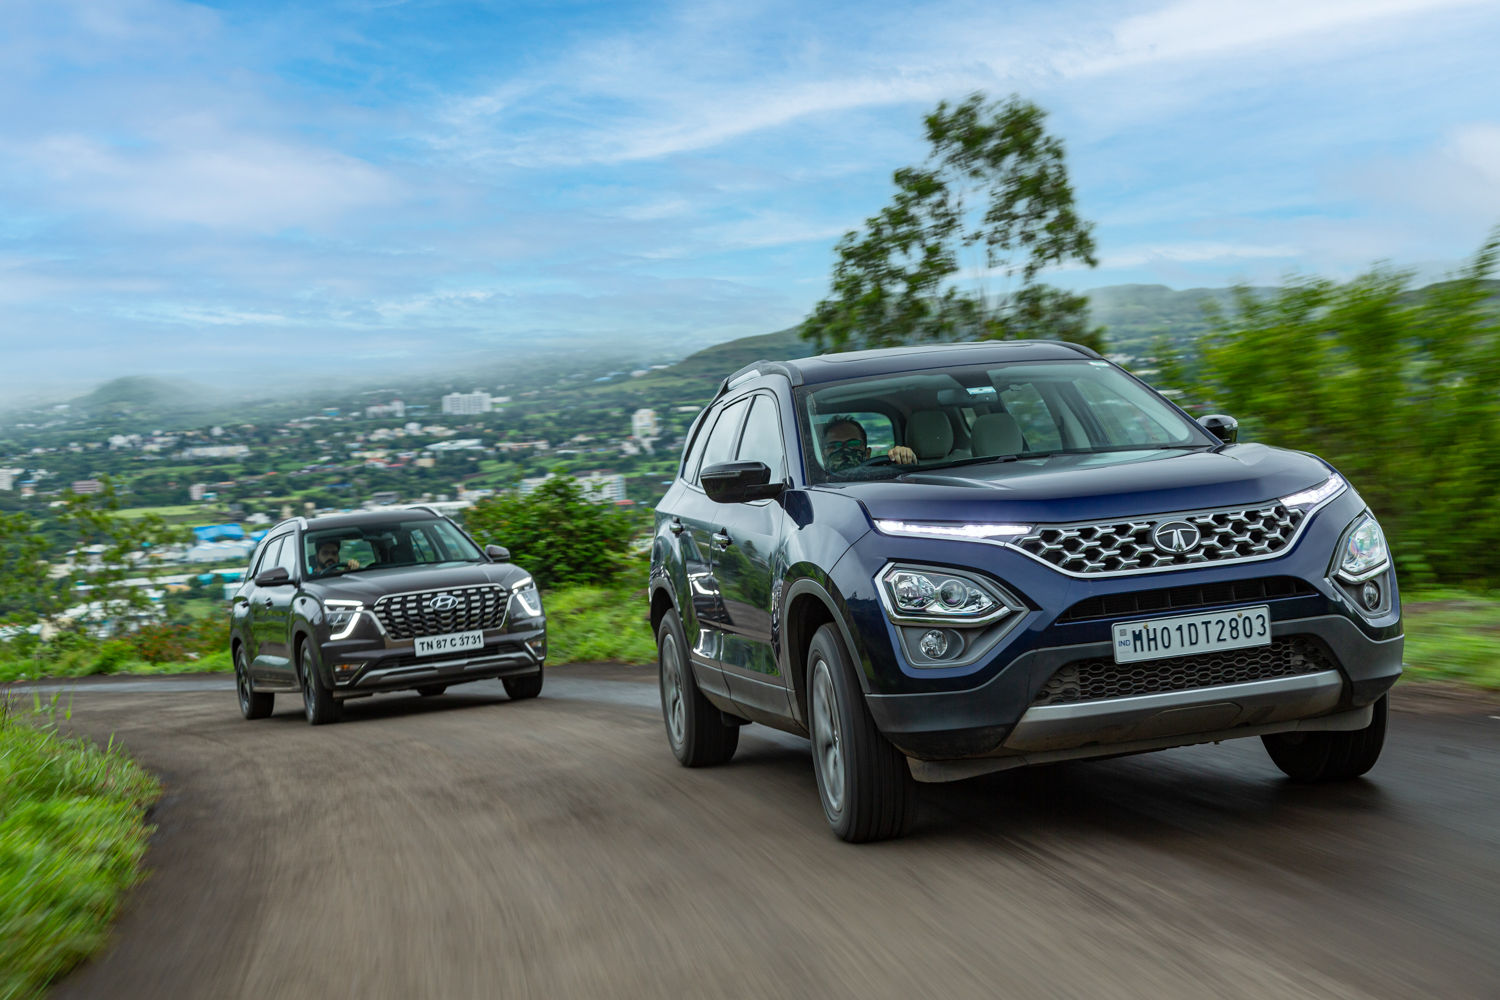 Hyundai Alcazar vs Tata Safari Comparison Review: Diesel Automatic, Captain Seat Variants Compared!